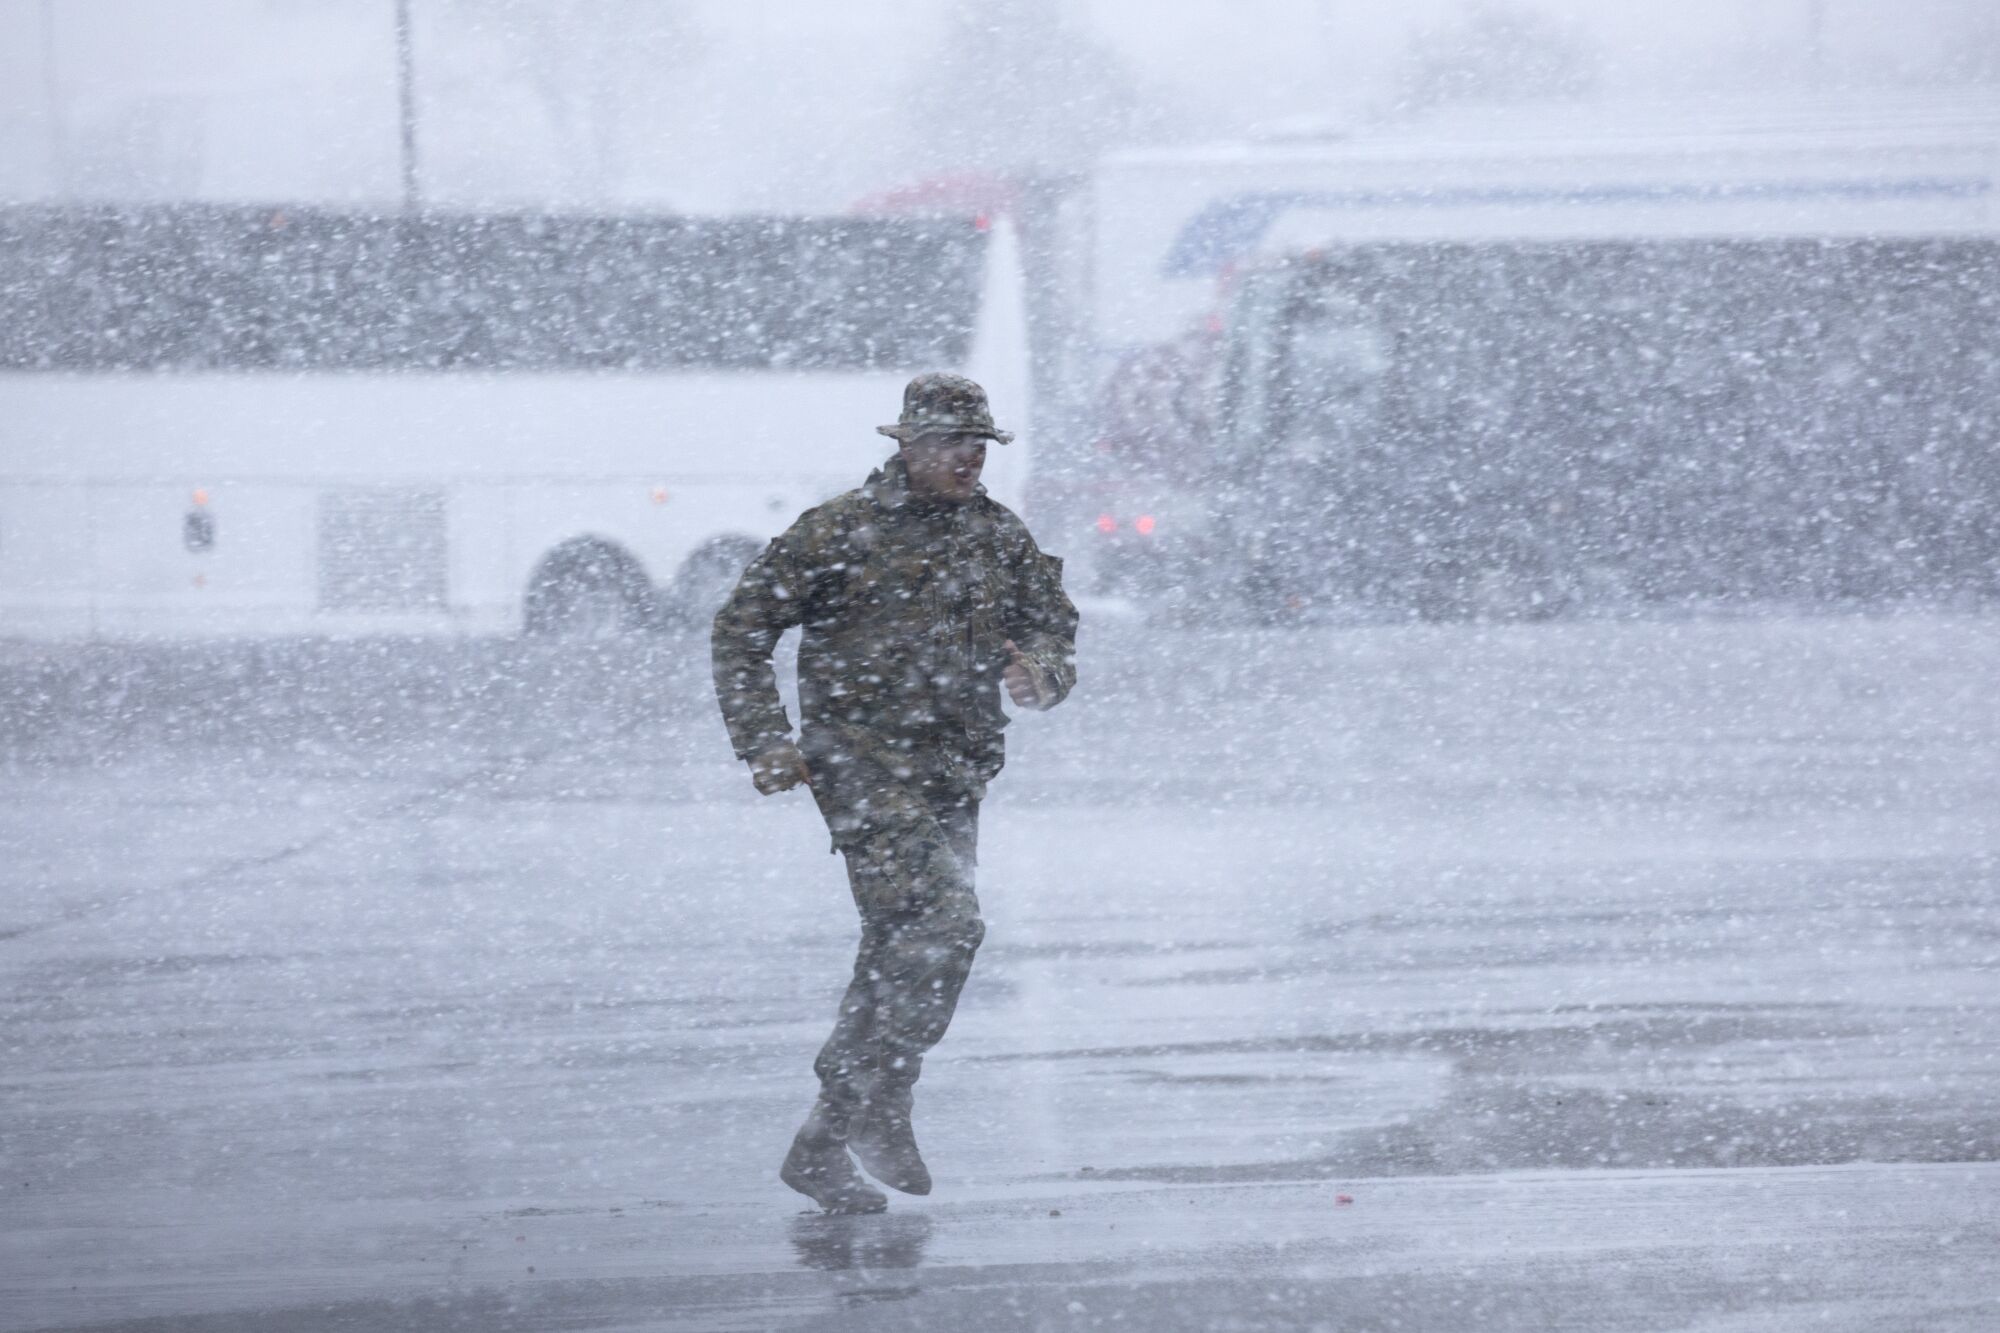 A man in camouflage clothing runs across a slushy parking lot as snow falls